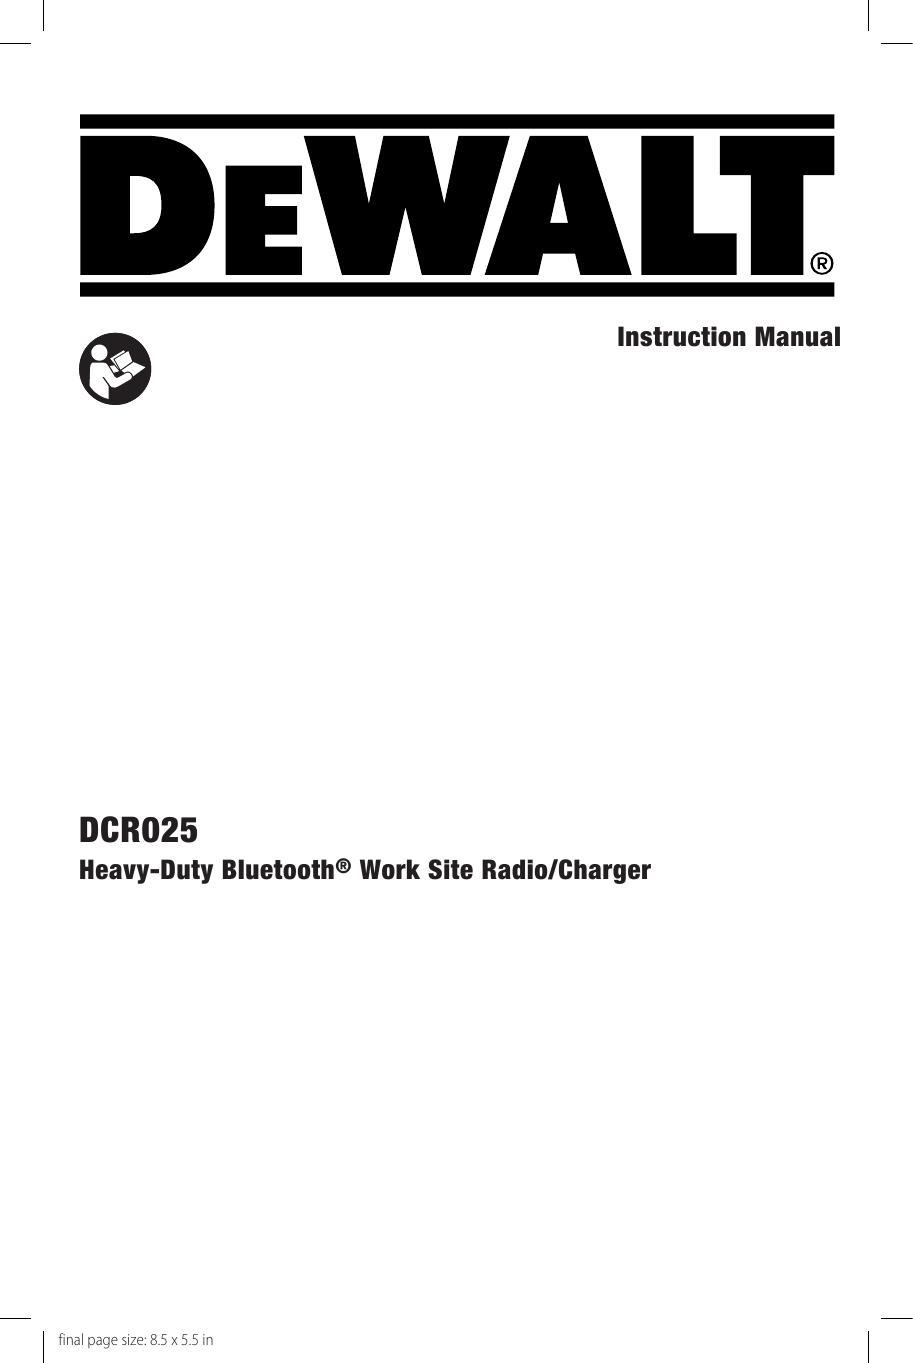 dwal-instruction-manual---dcro25-heavy-duty-bluetooth-work-site-radiocharger.pdf